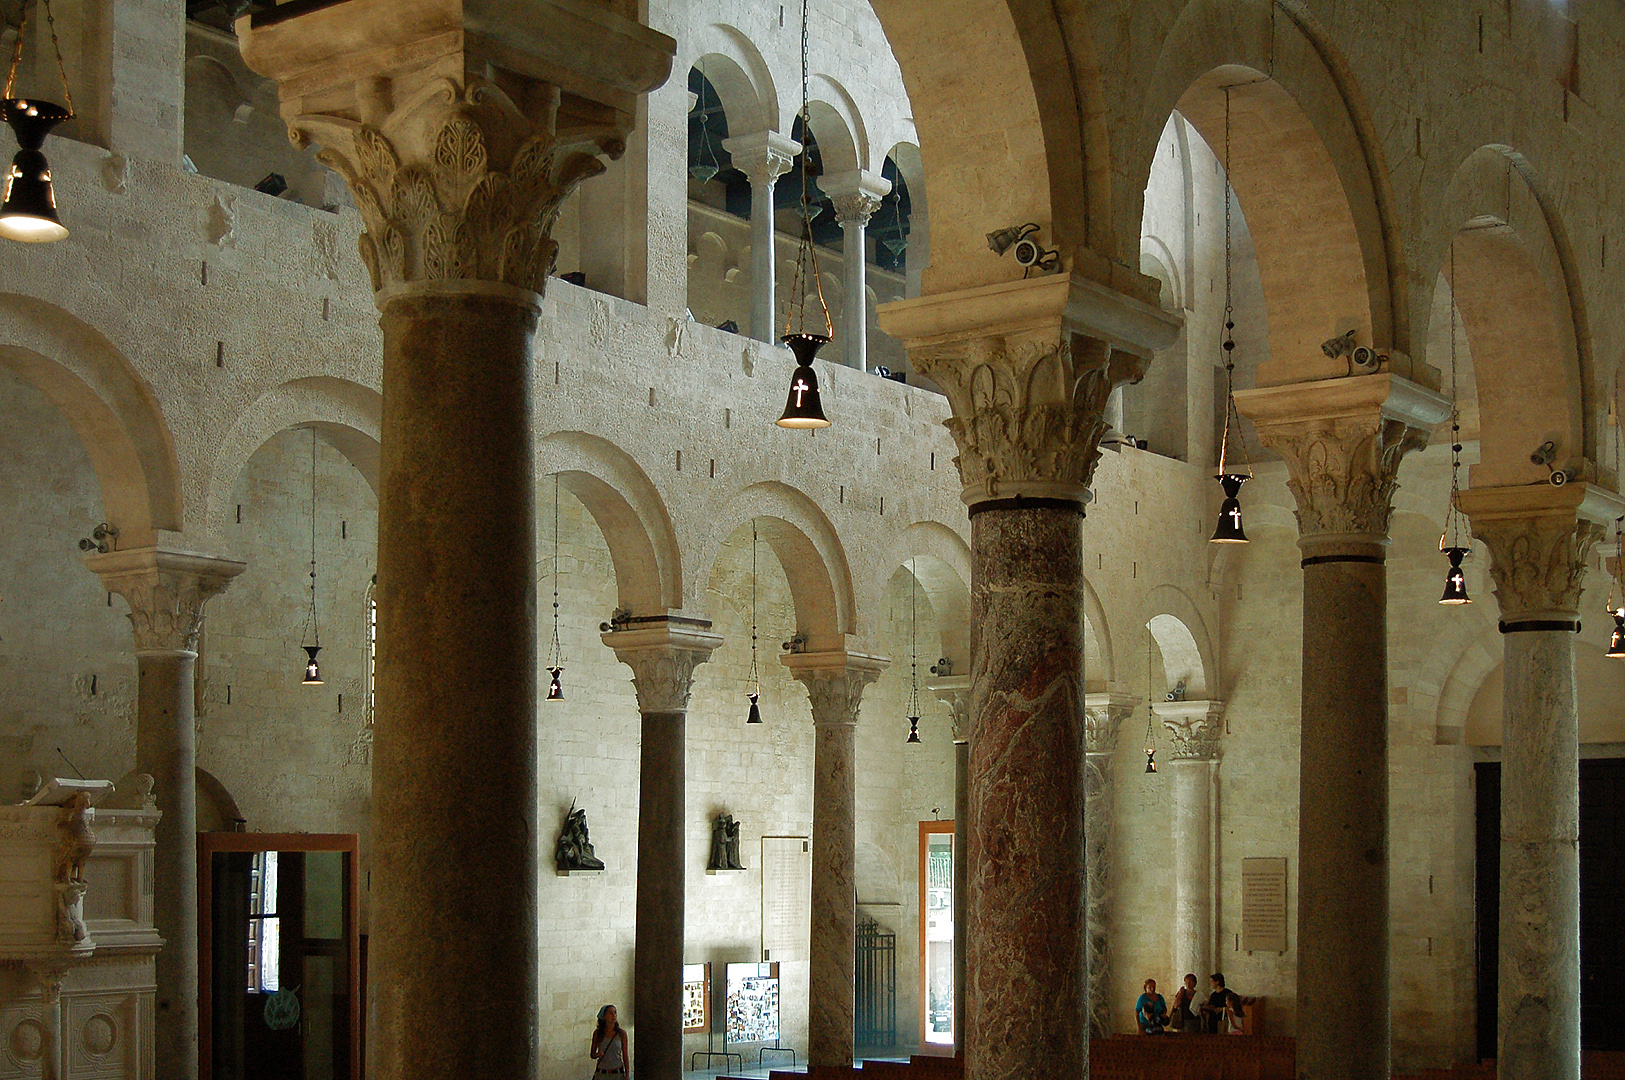 Kathedraal van Bari (Apulië, Italië), Bari Cathedral (Apulia, Italy)